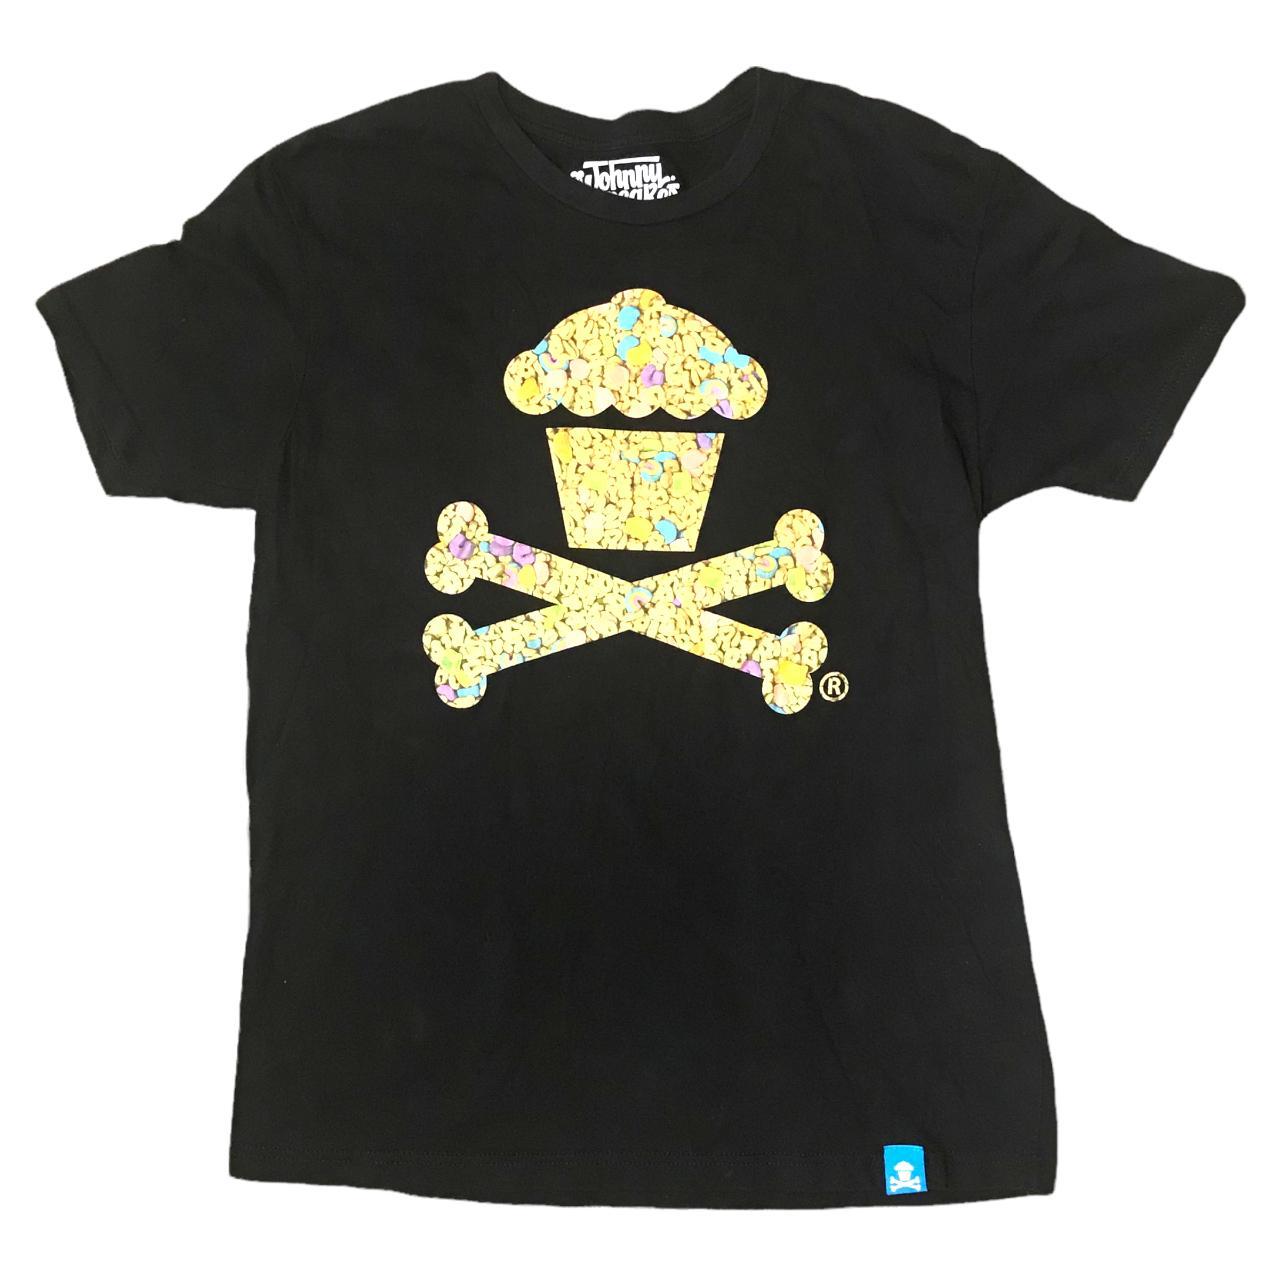 Johnny Cupcakes Men's Black T-shirt